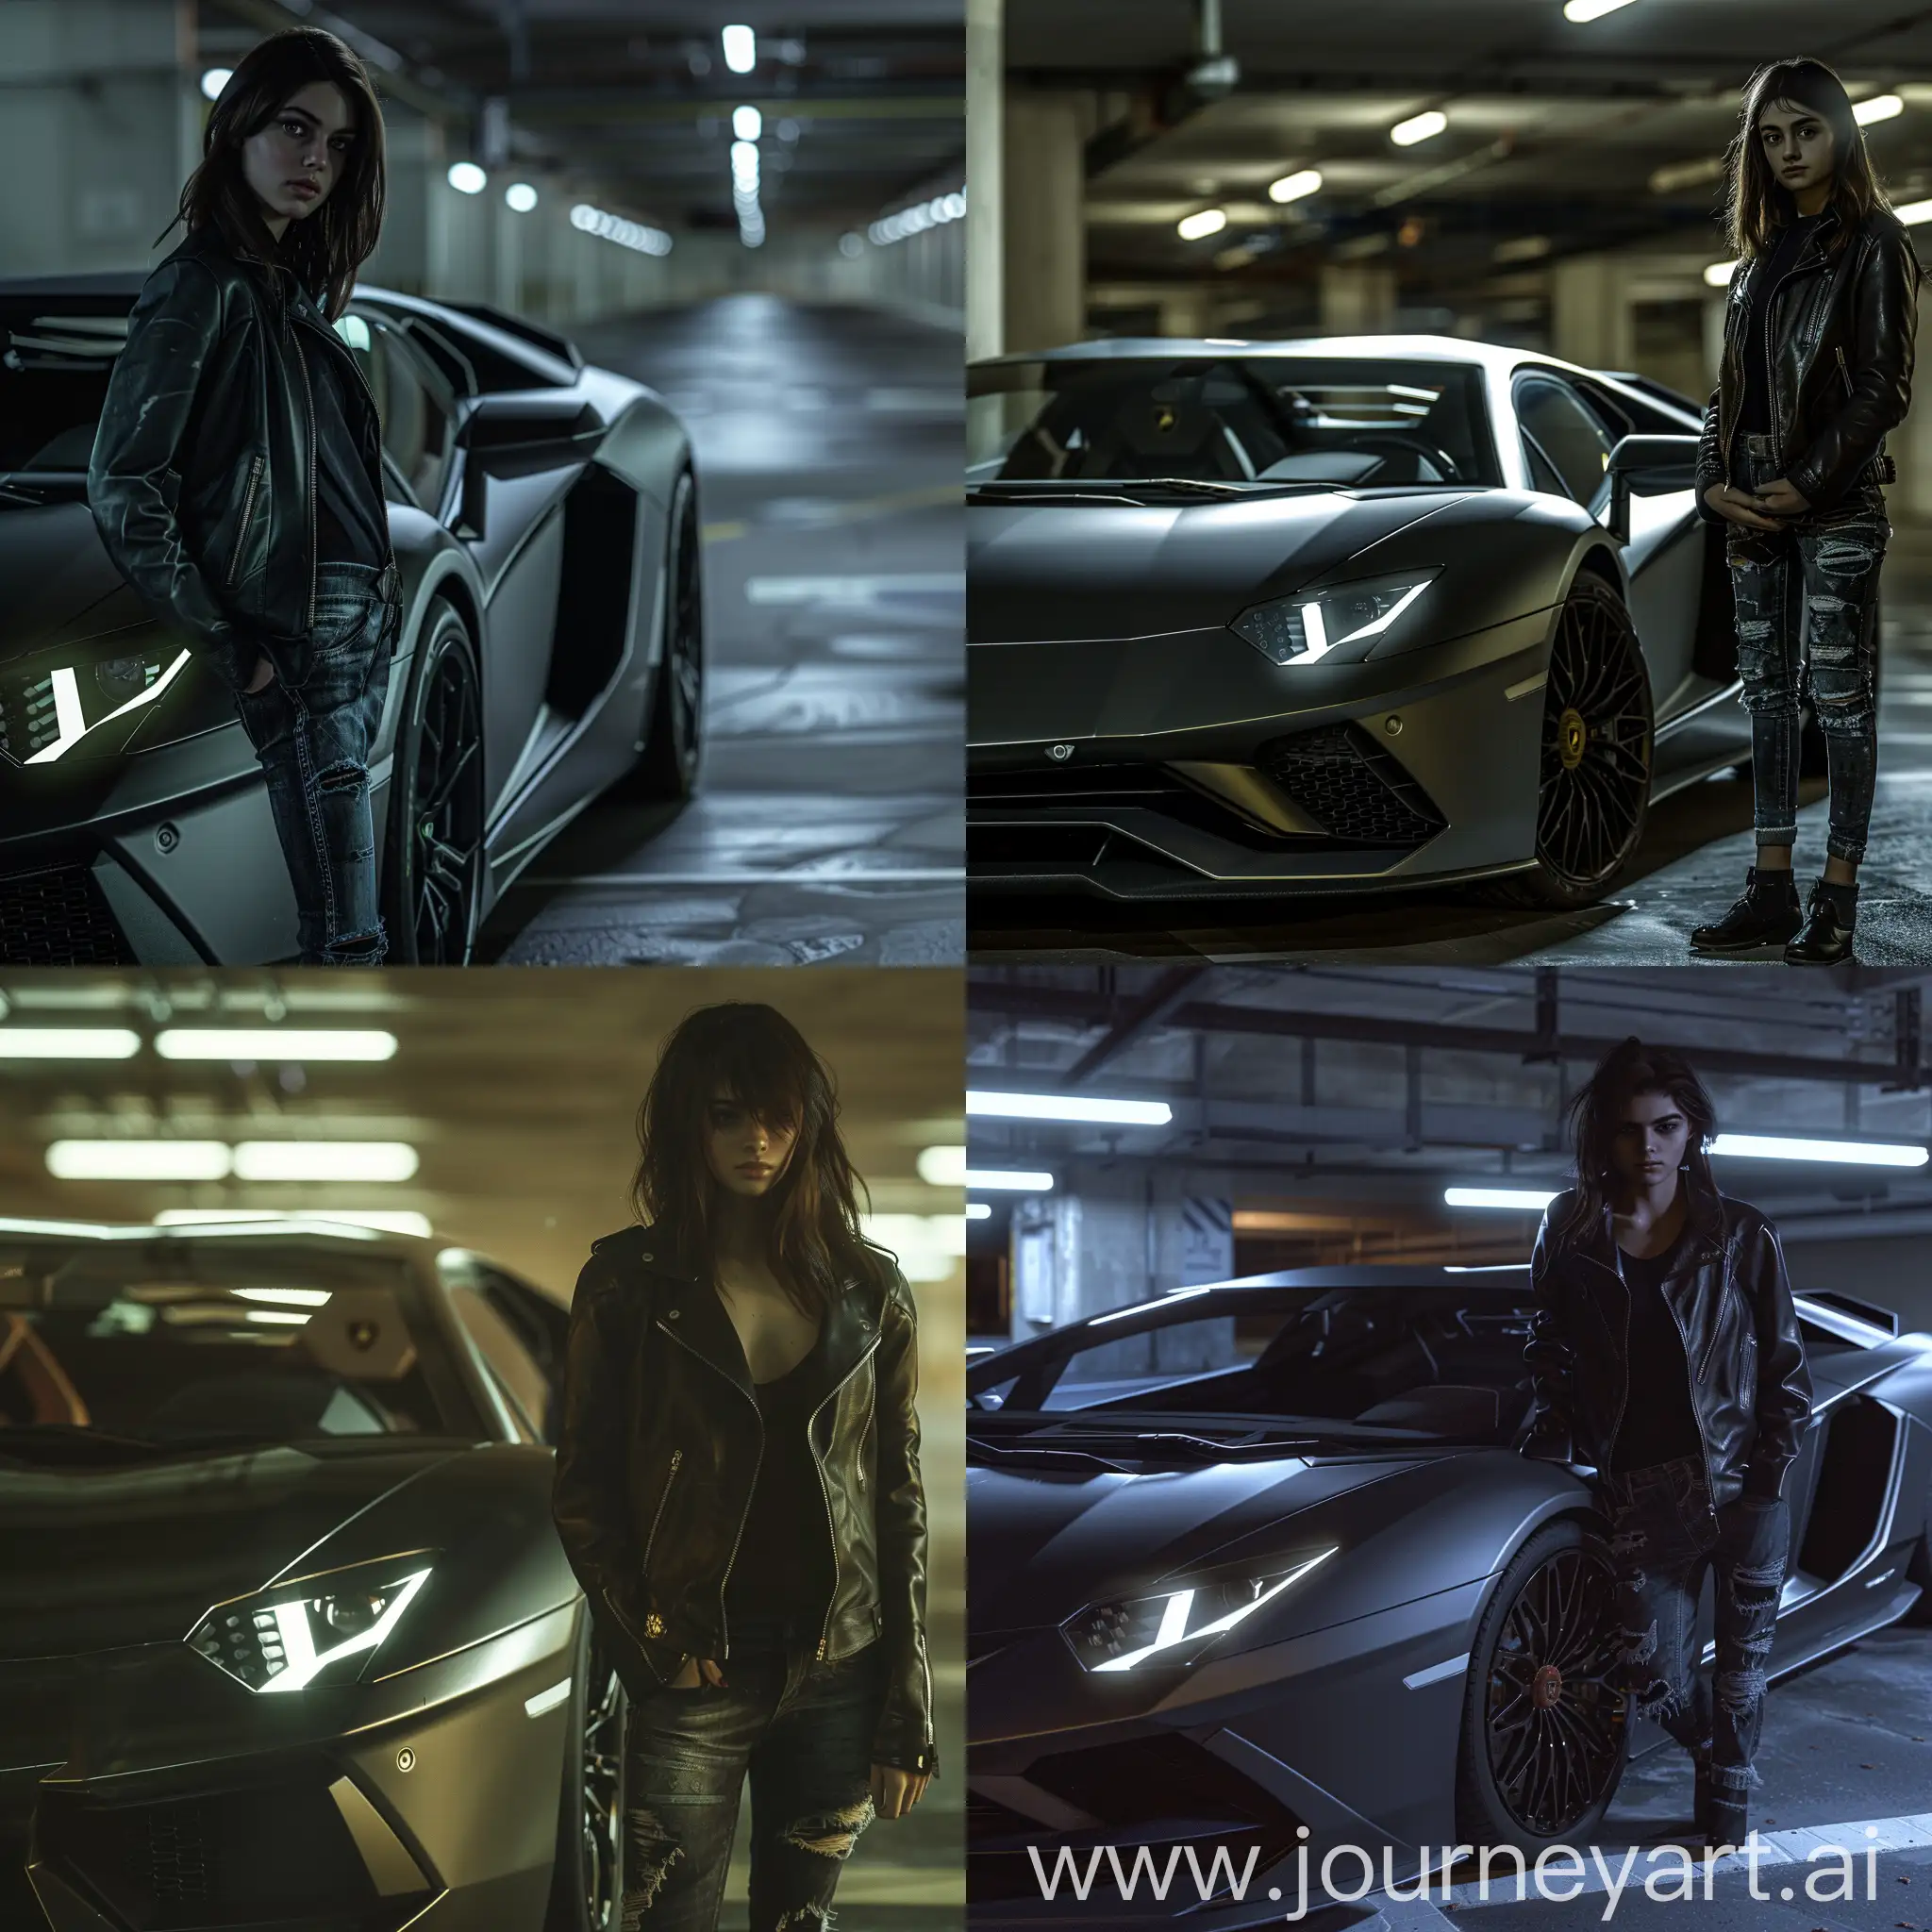 Stylish-Teenager-Poses-with-Black-Lamborghini-Aventador-in-Underground-Parking-Garage